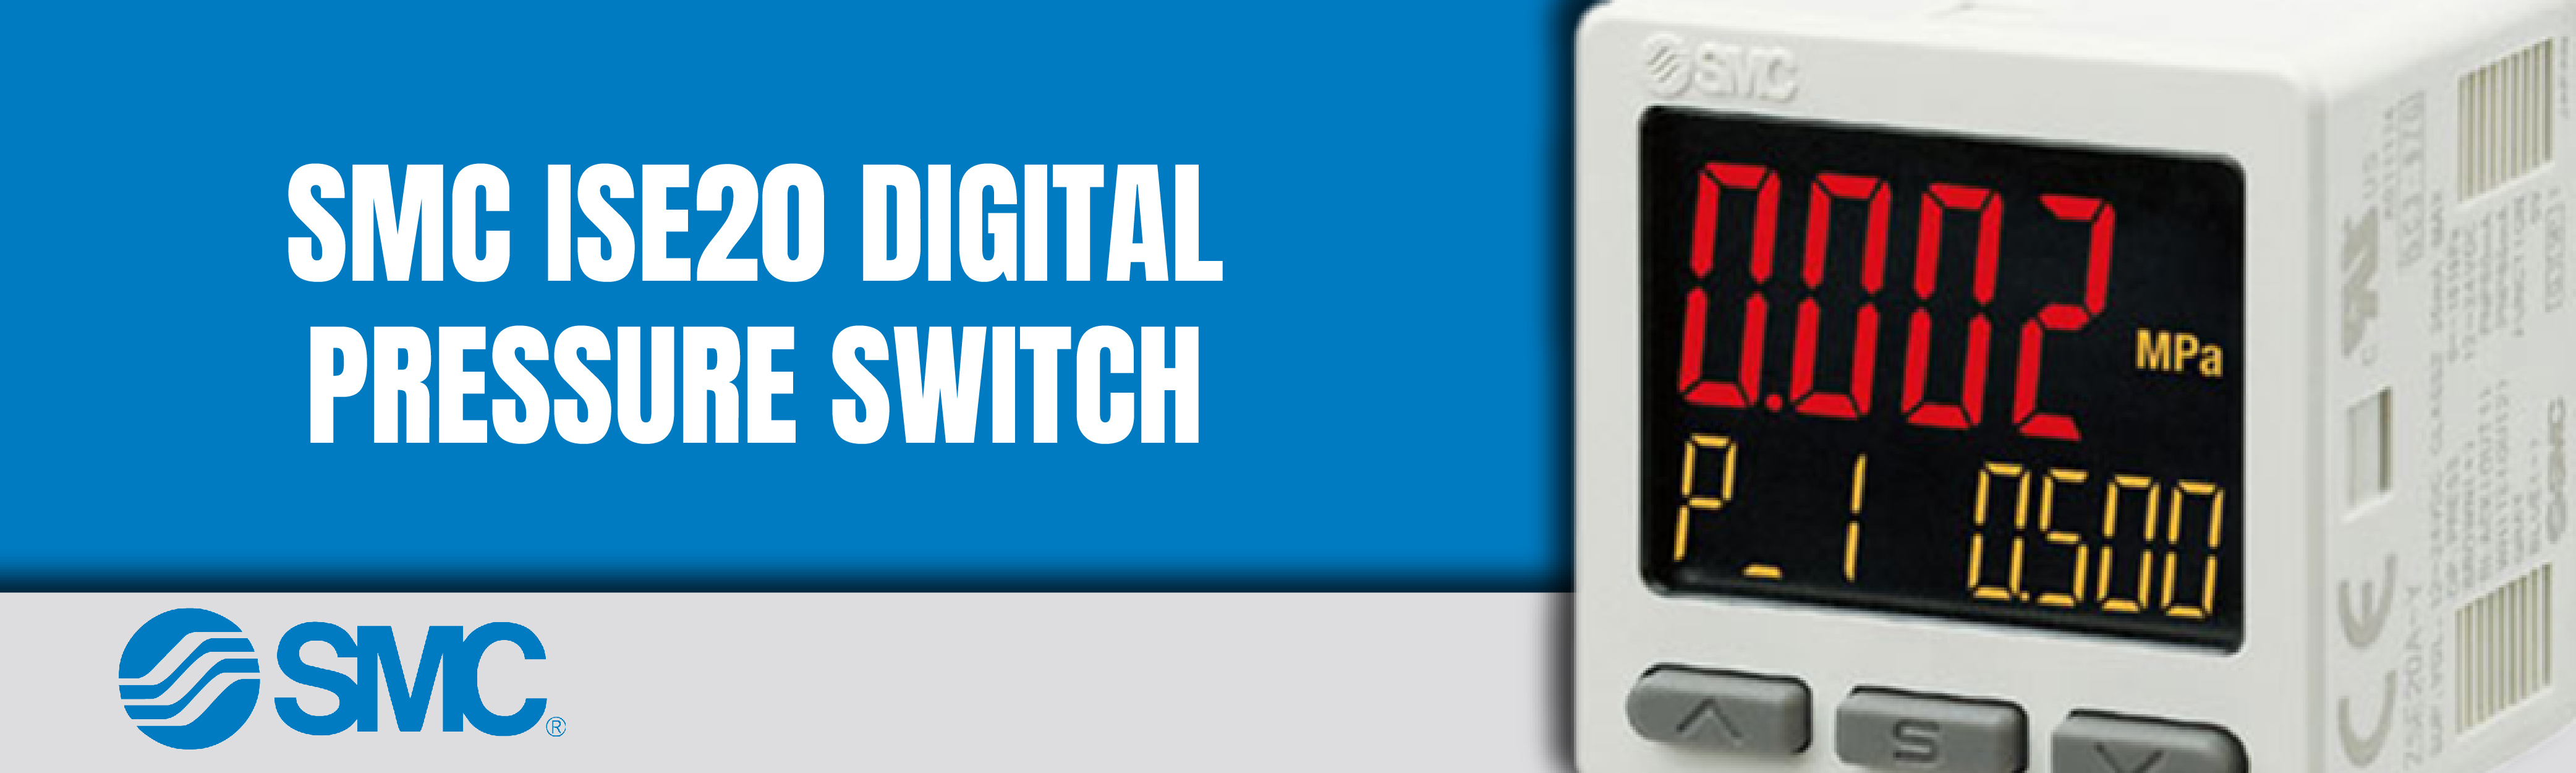 SMC ISE20 Digital Pressure Switch from Scott Equipment Company